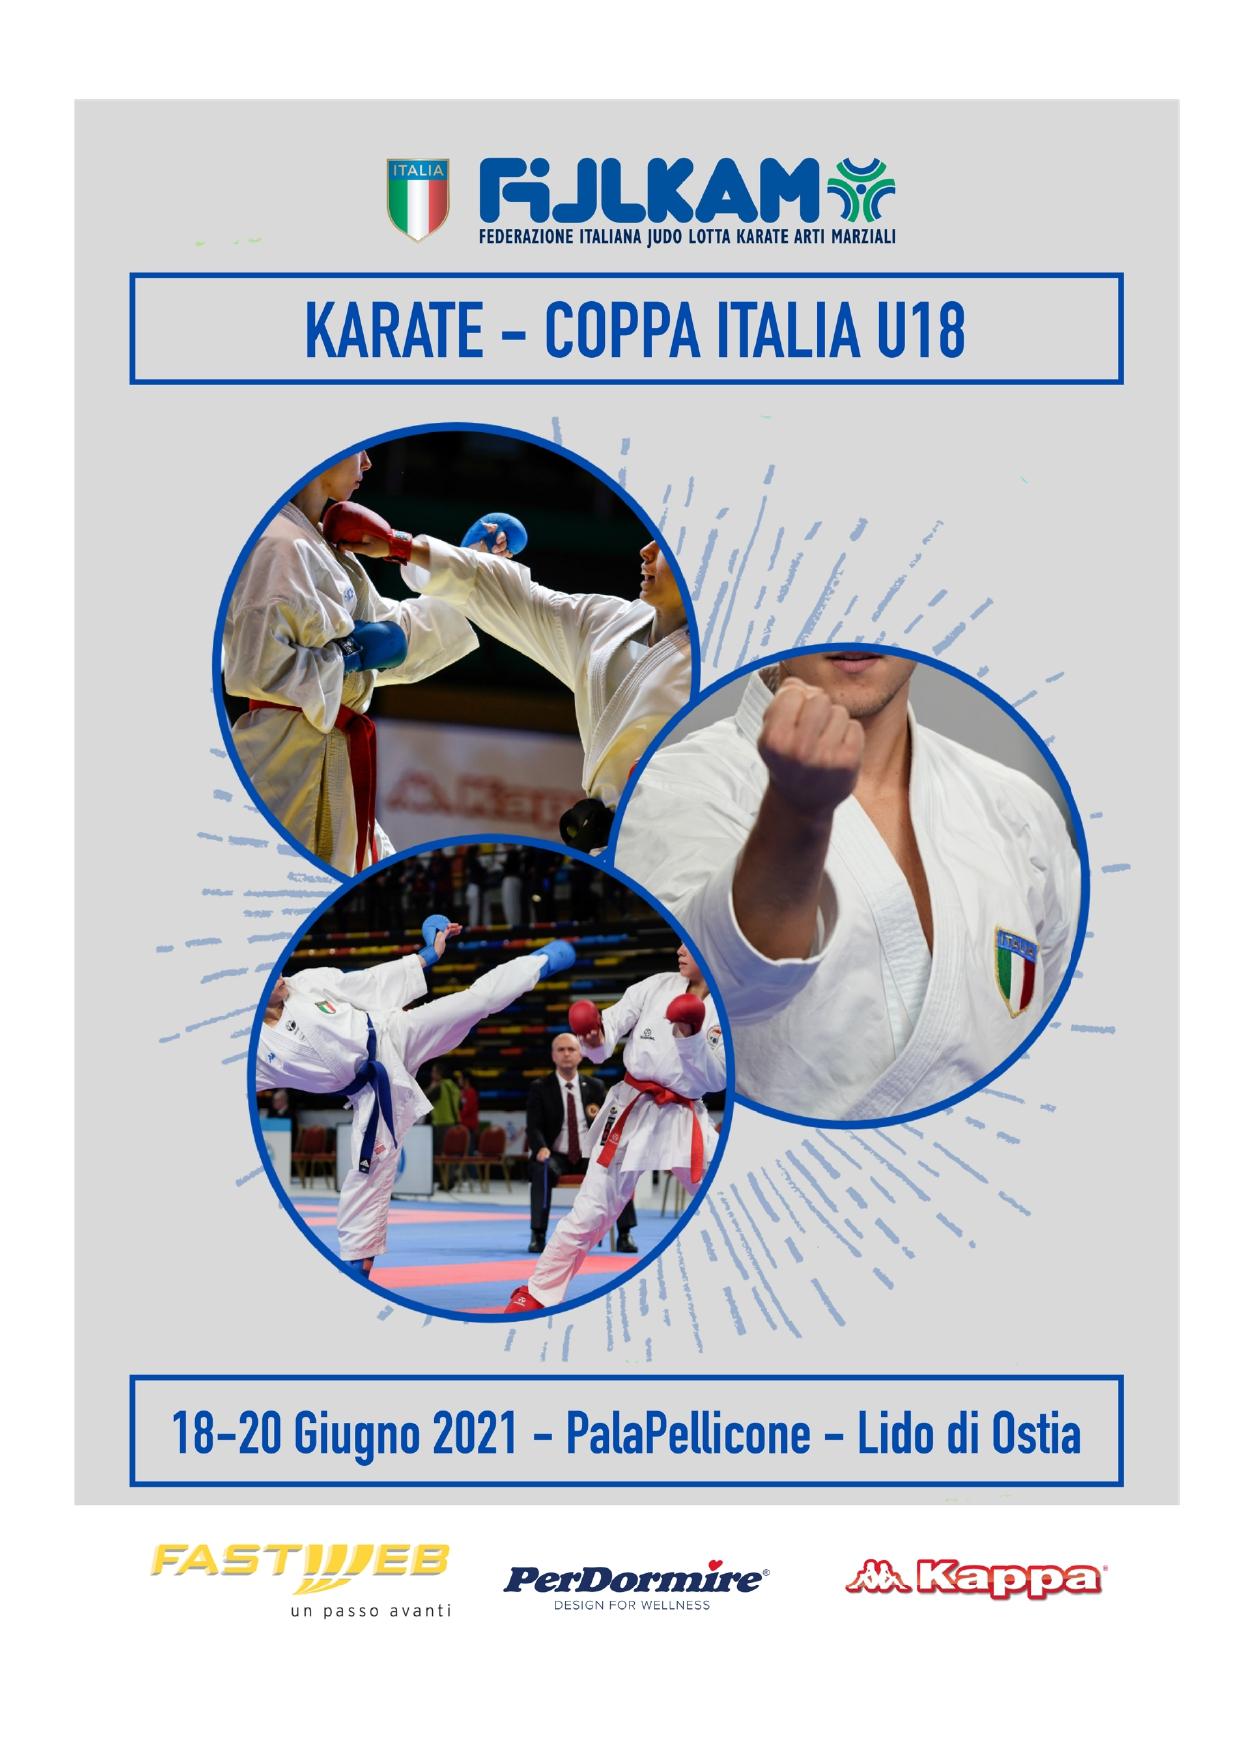 images/karate/large/locandina_Coppa_Italia_U18.jpg